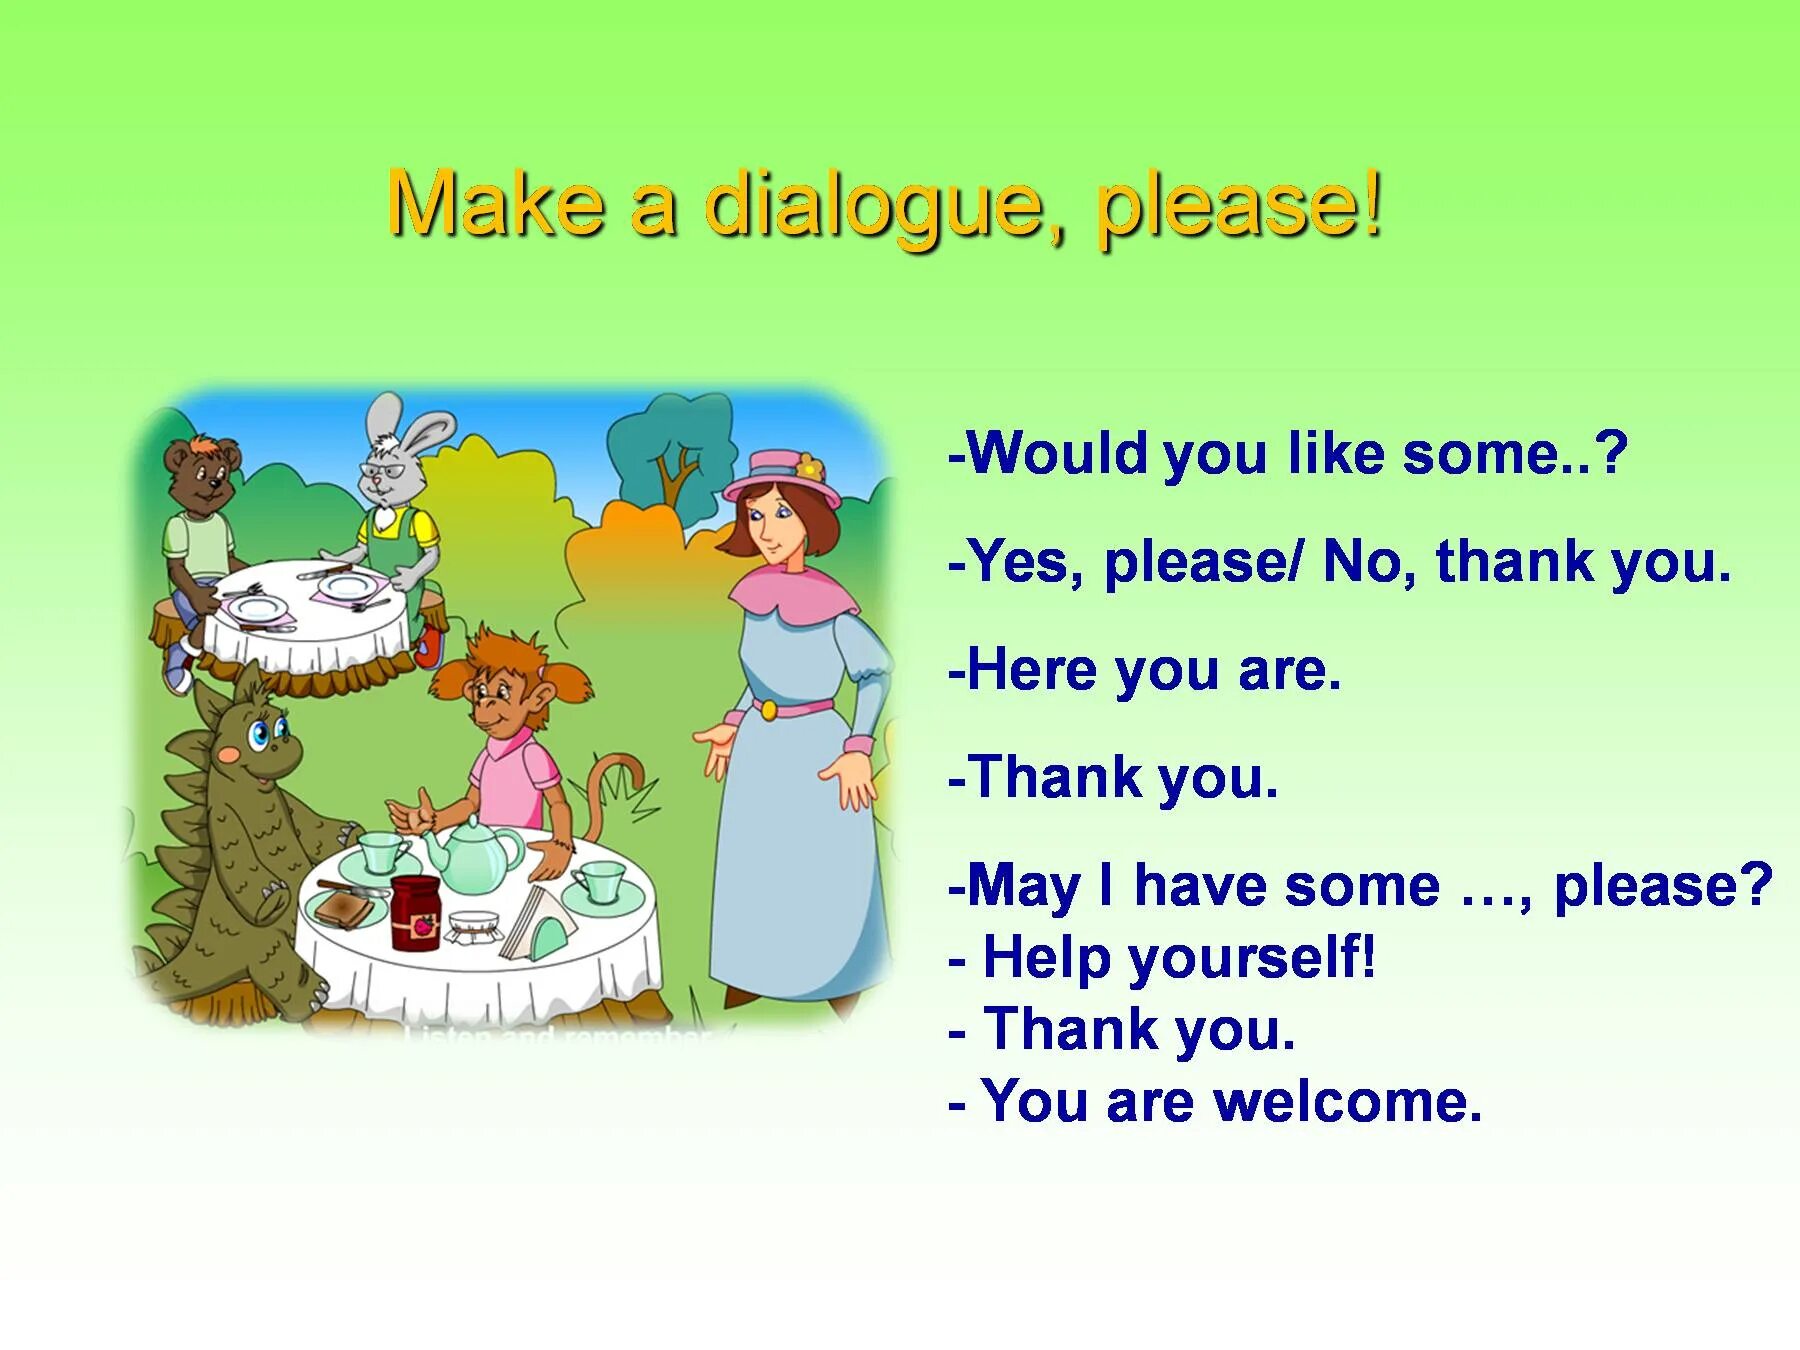 May d like you. Диалог по английскому языку. Диалог на английском за столом. Английские диалоги по темам. Диалоги уроки английского.